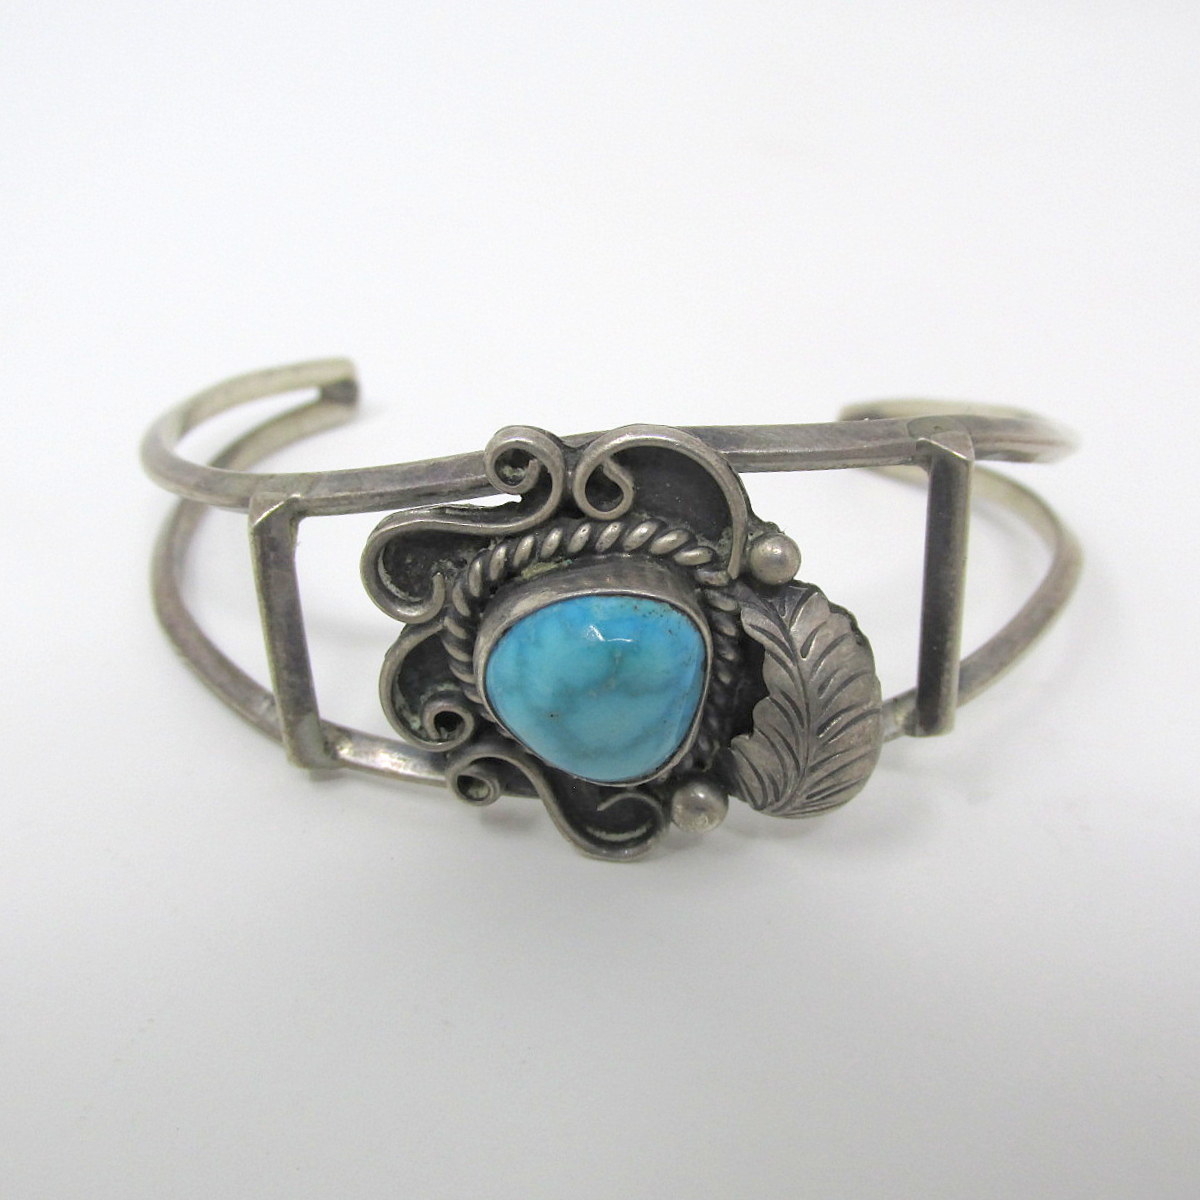 Primary image for Turquoise Bracelet Silver Leaf Original Angela Lee Native New Mexico US Seller c